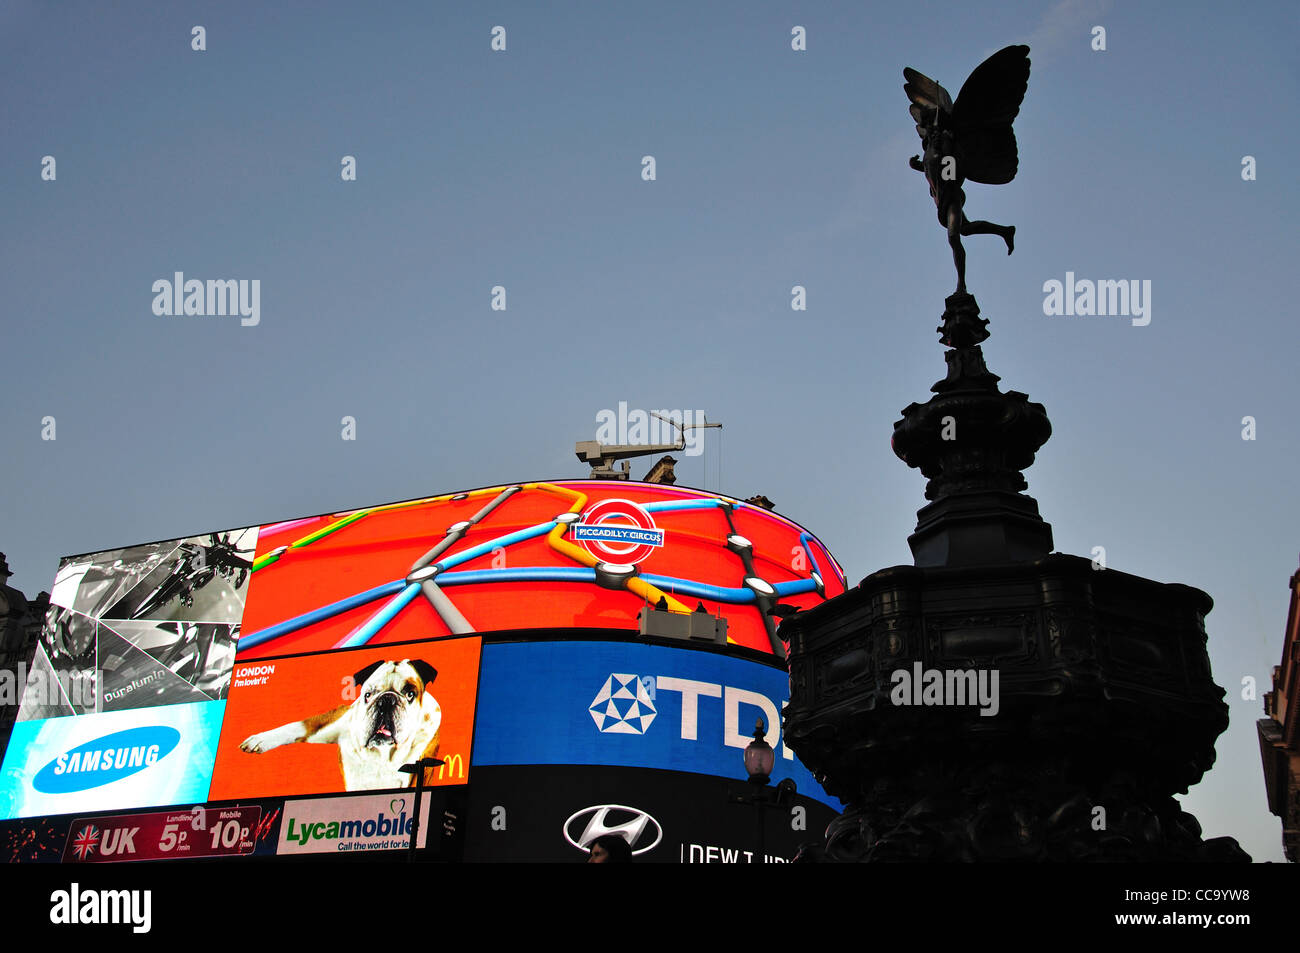 Statua di Anteros e insegne illuminate, Piccadilly Circus, West End, City of Westminster, Londra, Inghilterra, Regno Unito Foto Stock